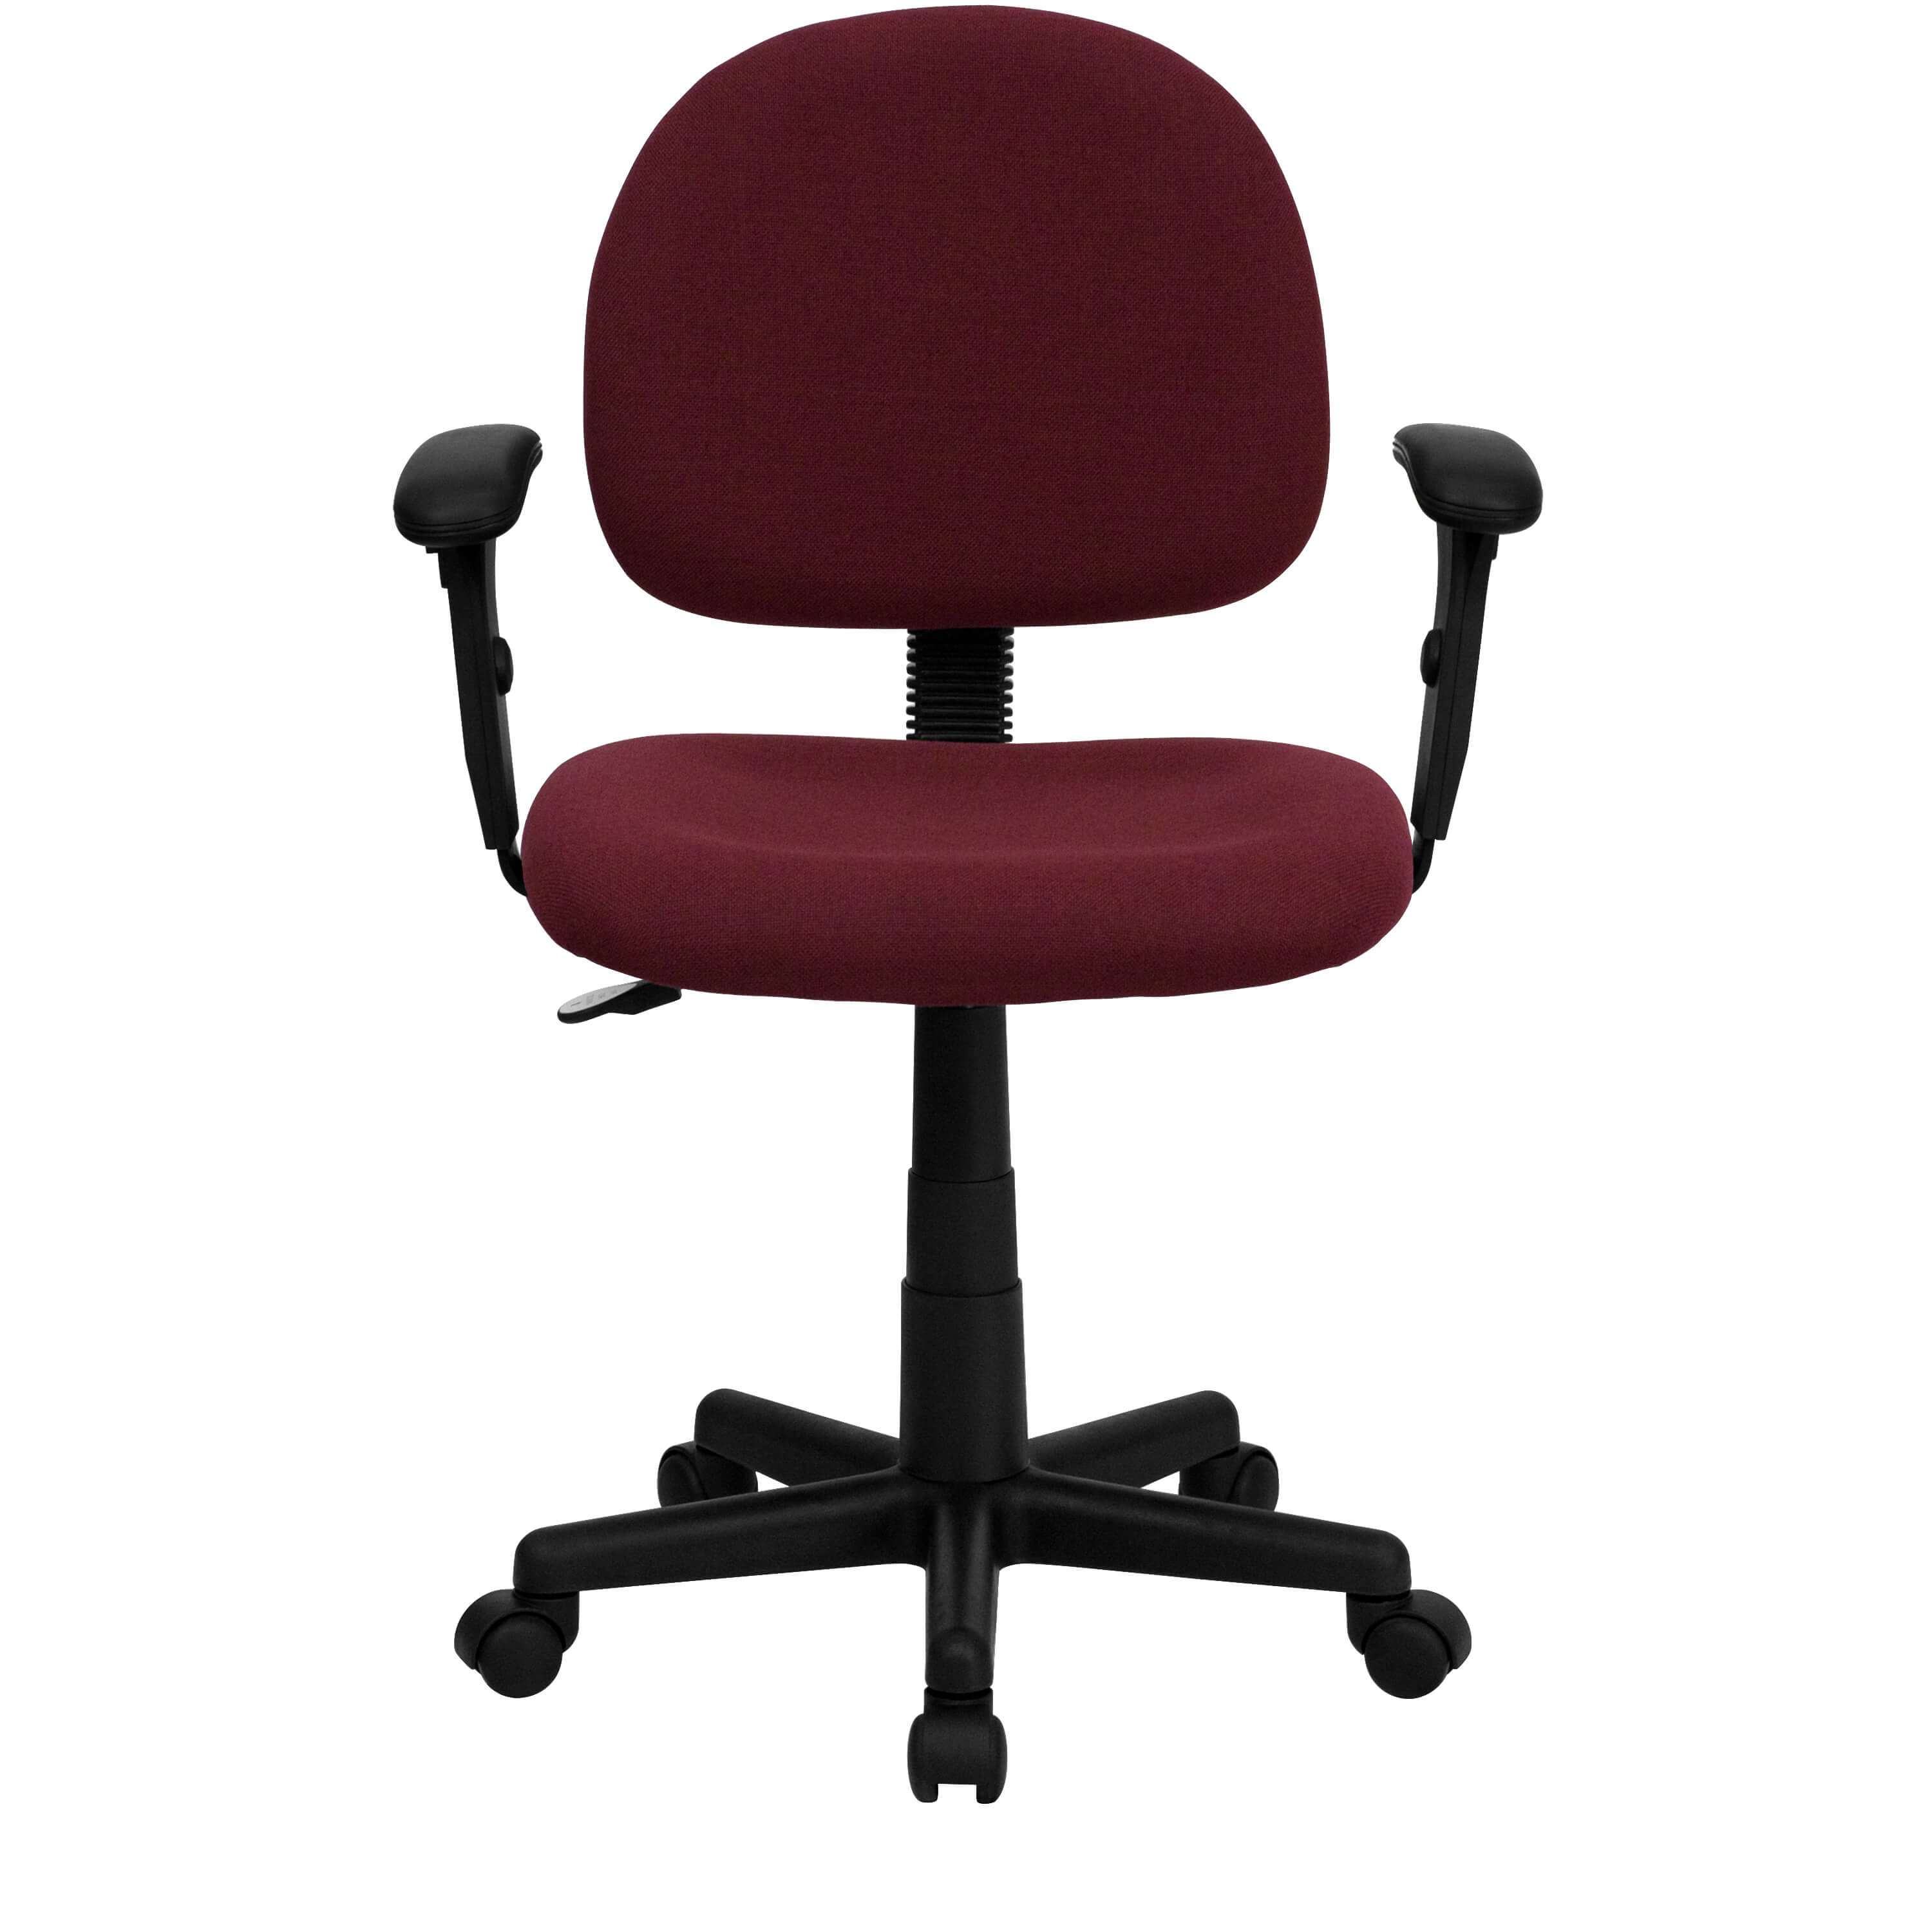 Cool desk chairs CUB BT 660 1 BY GG FLA